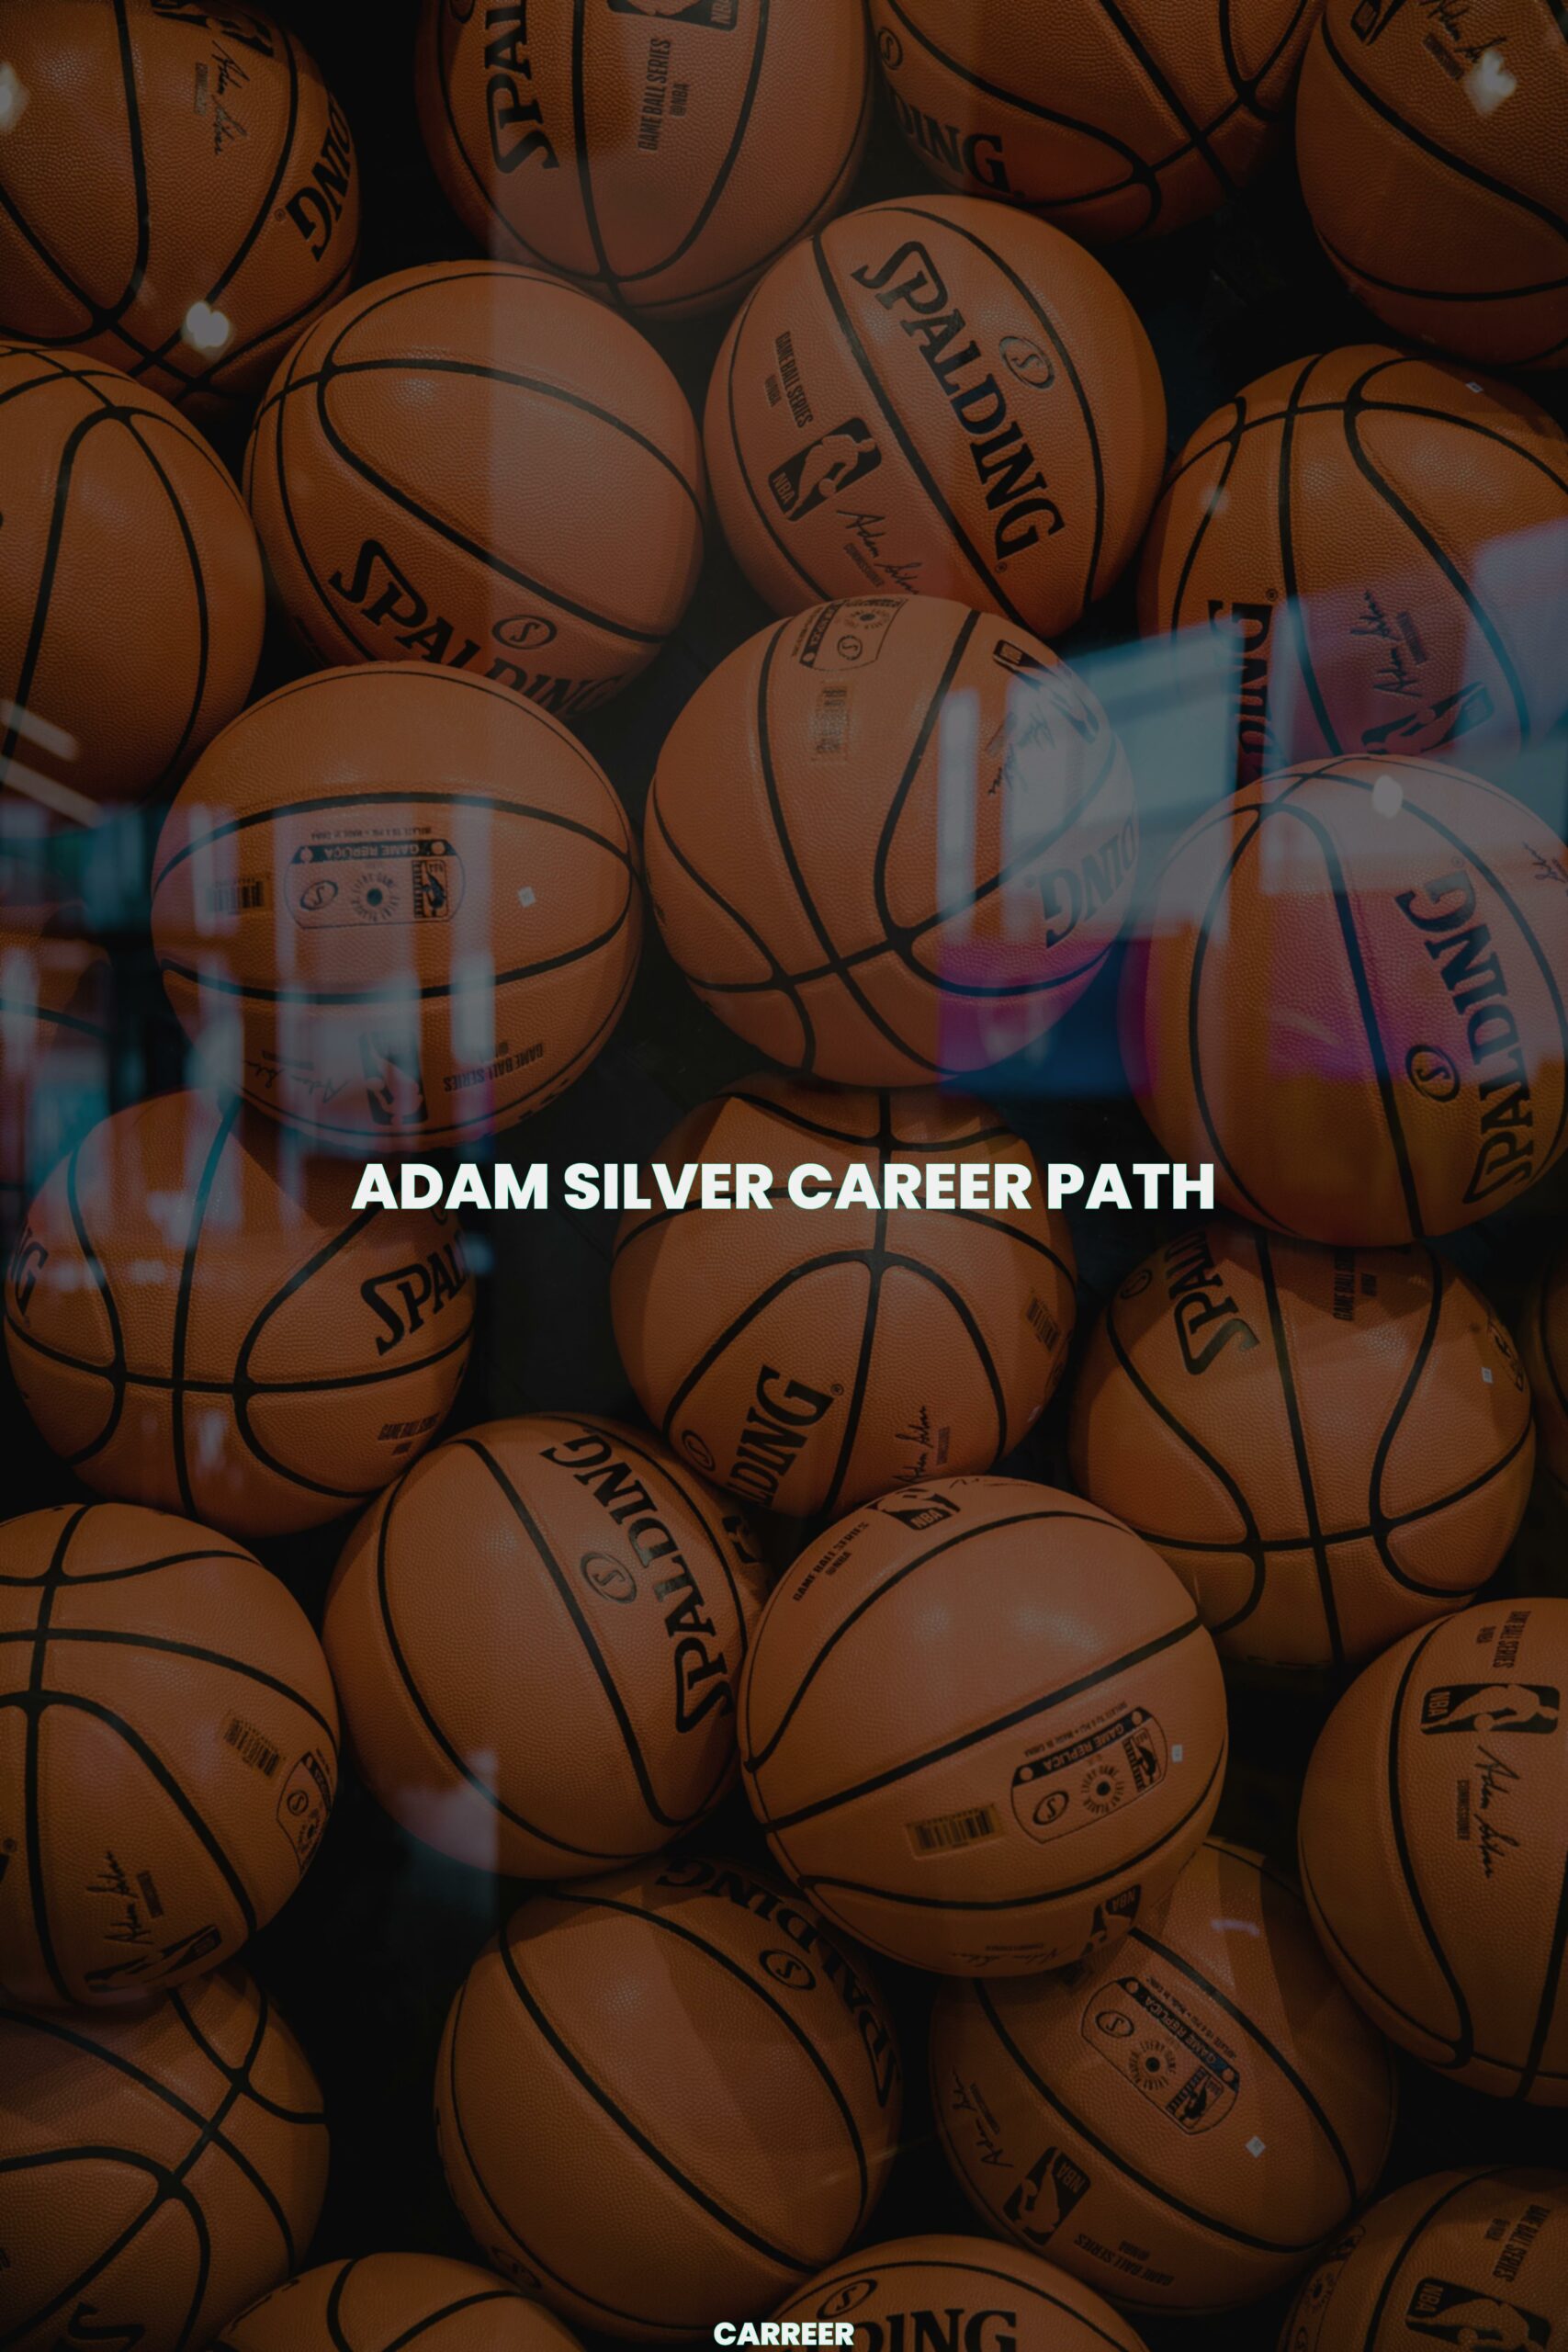 Adam silver career path